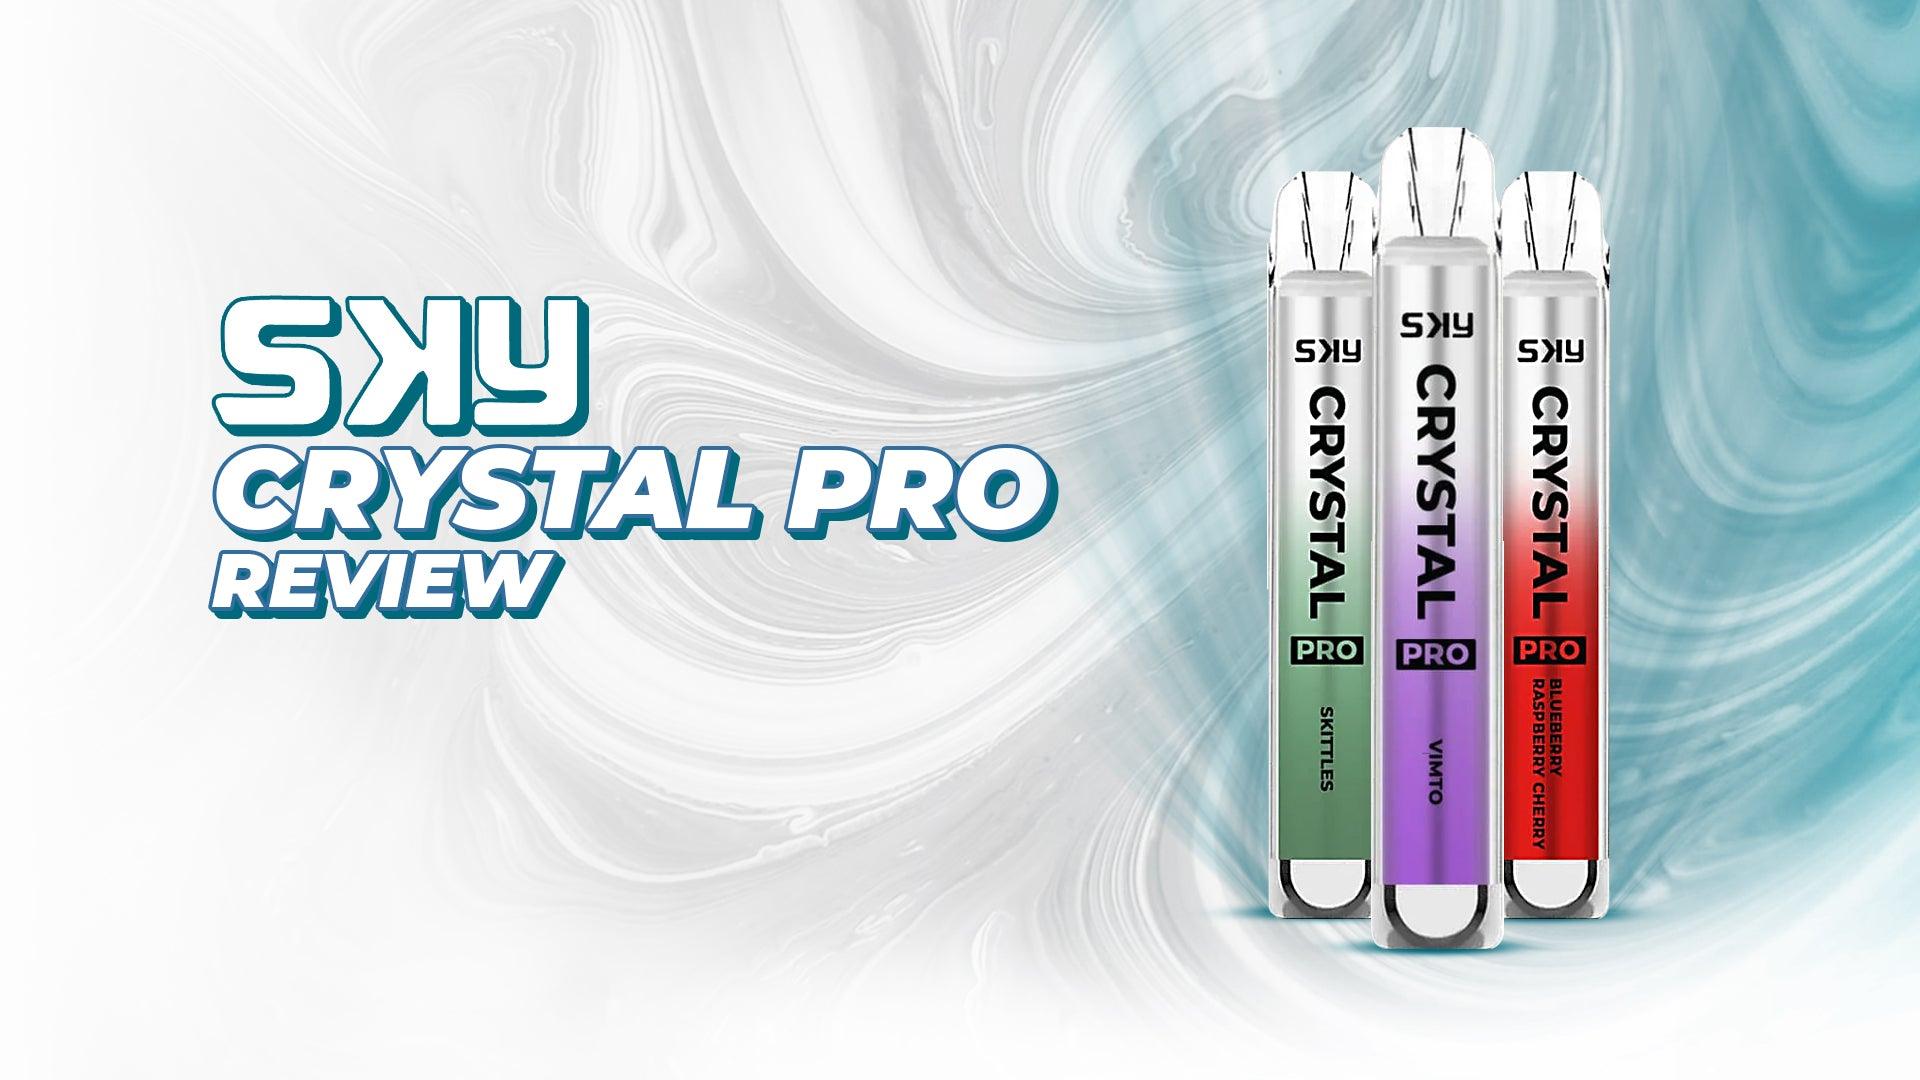 Sky Crystal Pro Review - Brand:SKY, Category:Vape Kits, Sub Category:Disposables